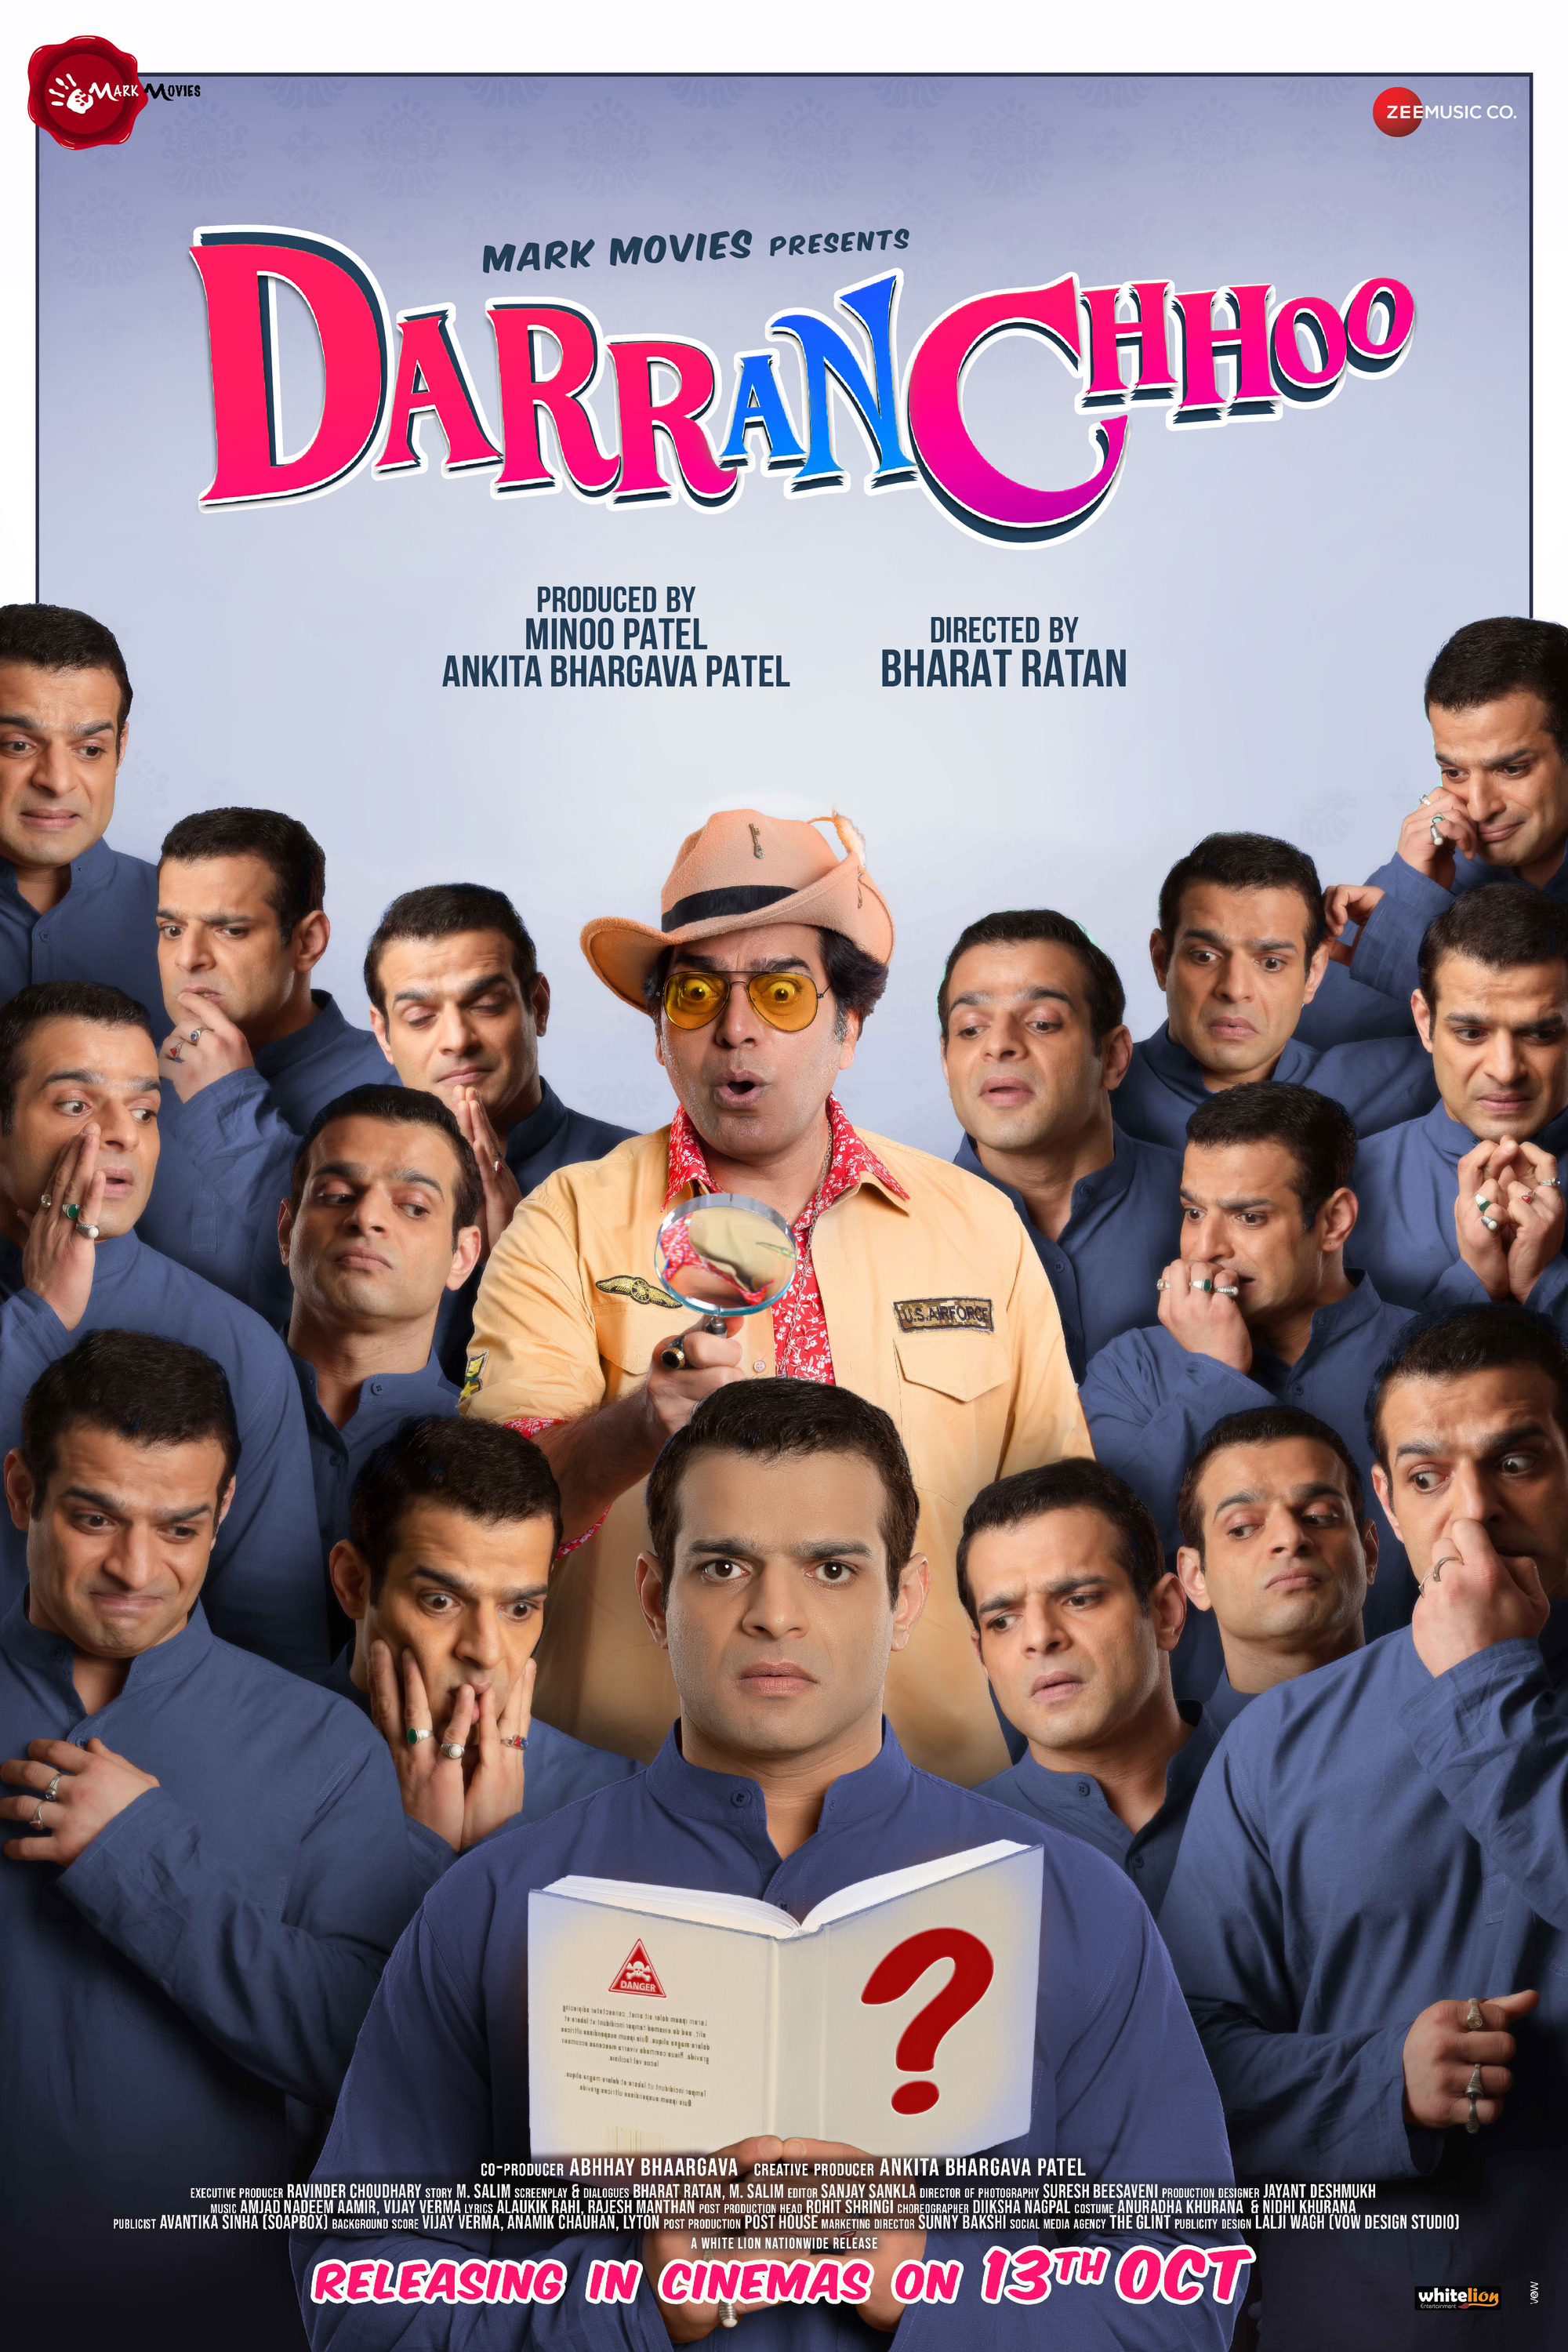 Mega Sized Movie Poster Image for Darran Chhoo (#3 of 4)